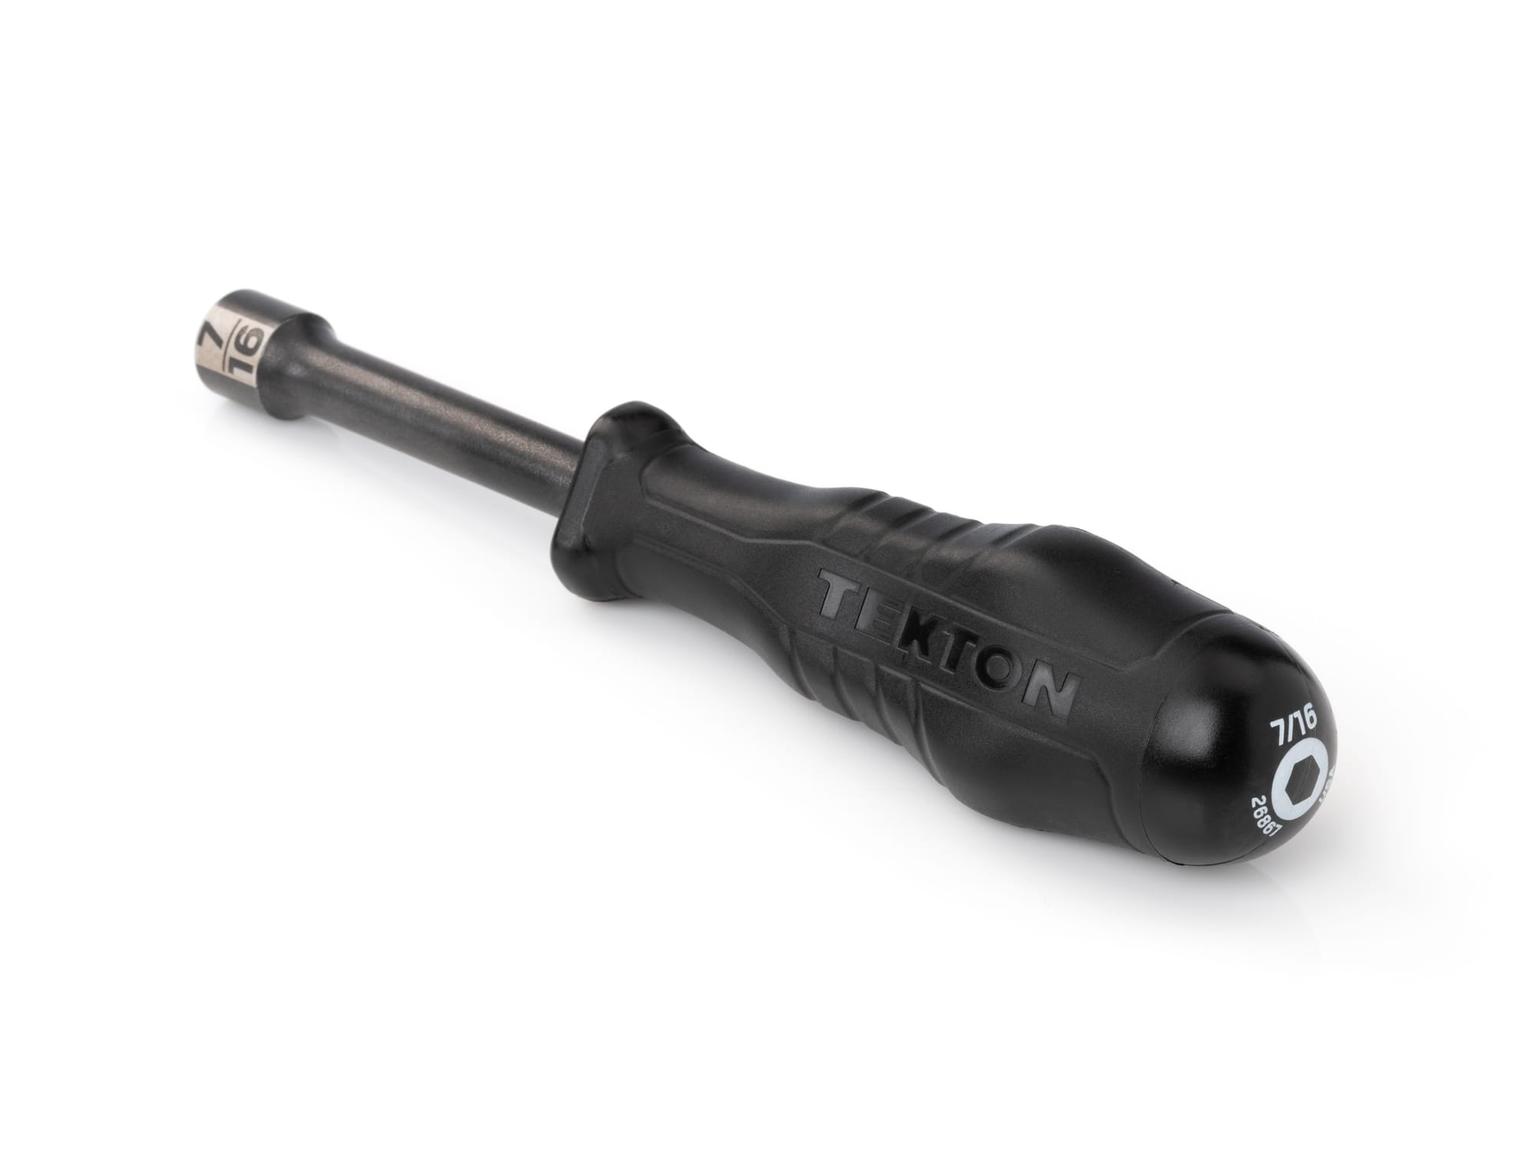 TEKTON 26867-T 7/16 Inch High-Torque Black Oxide Blade Nut Driver